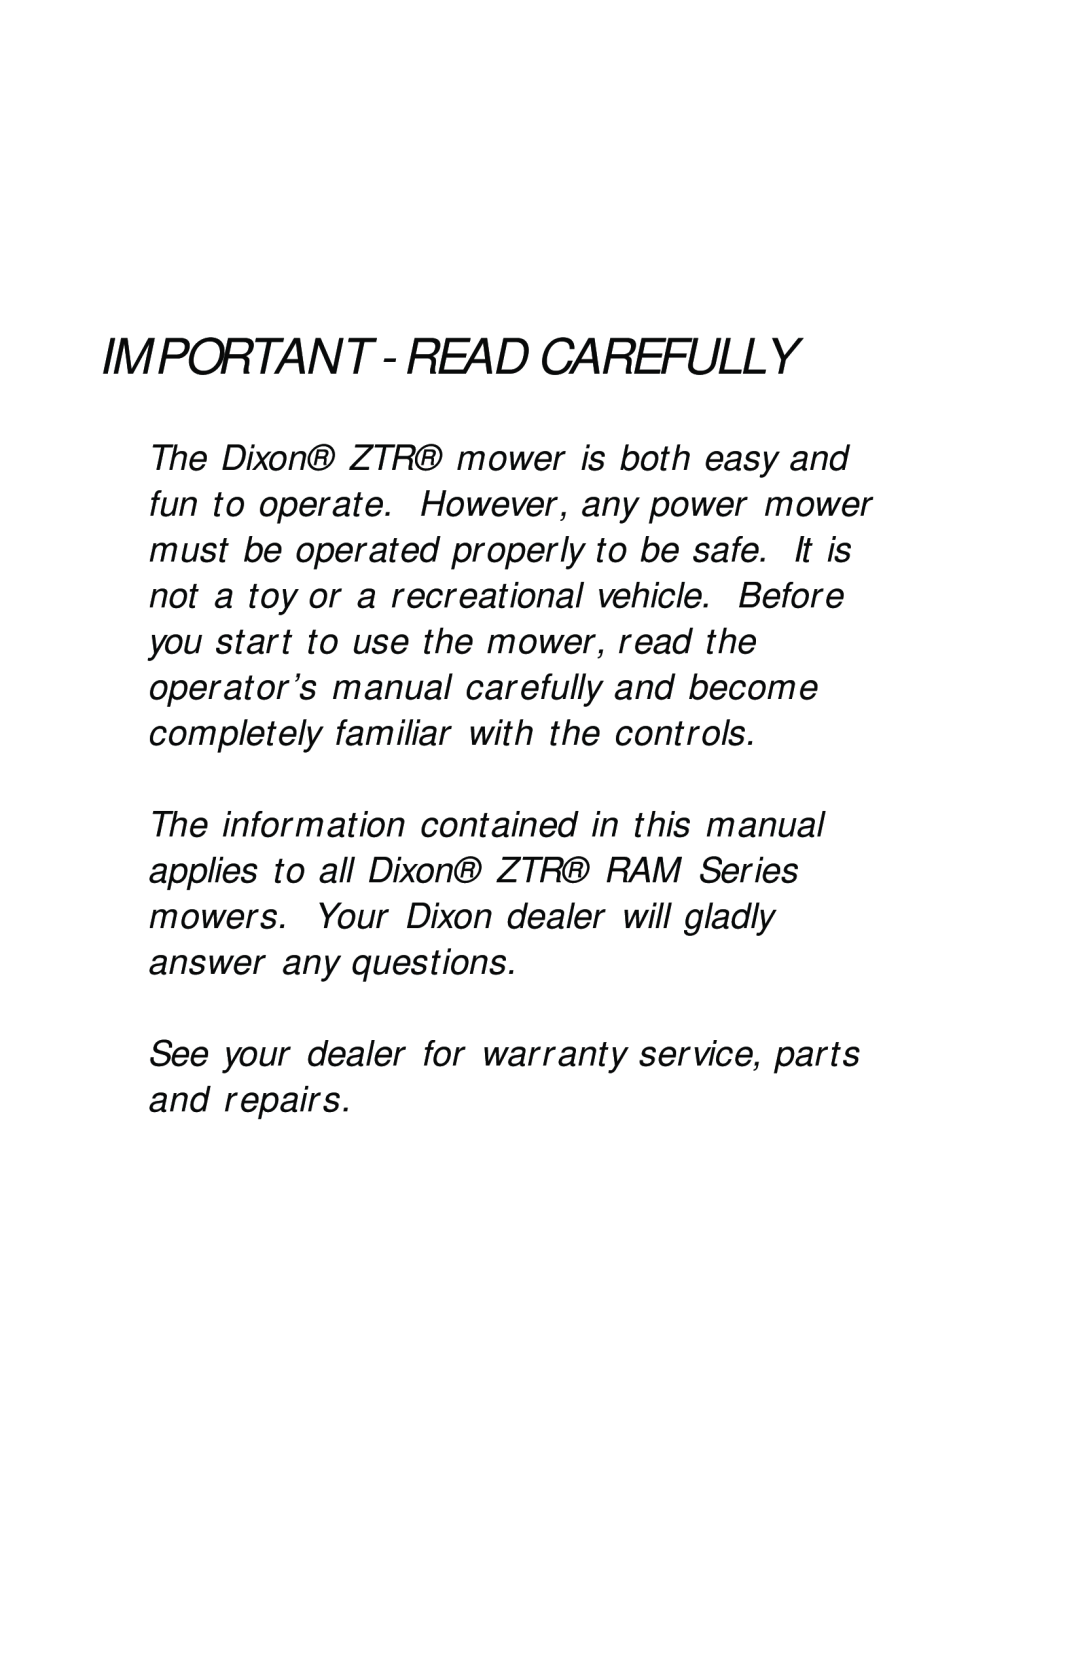 Dixon ZTR RAM 50, 17411-1103 manual Important - Read Carefully 